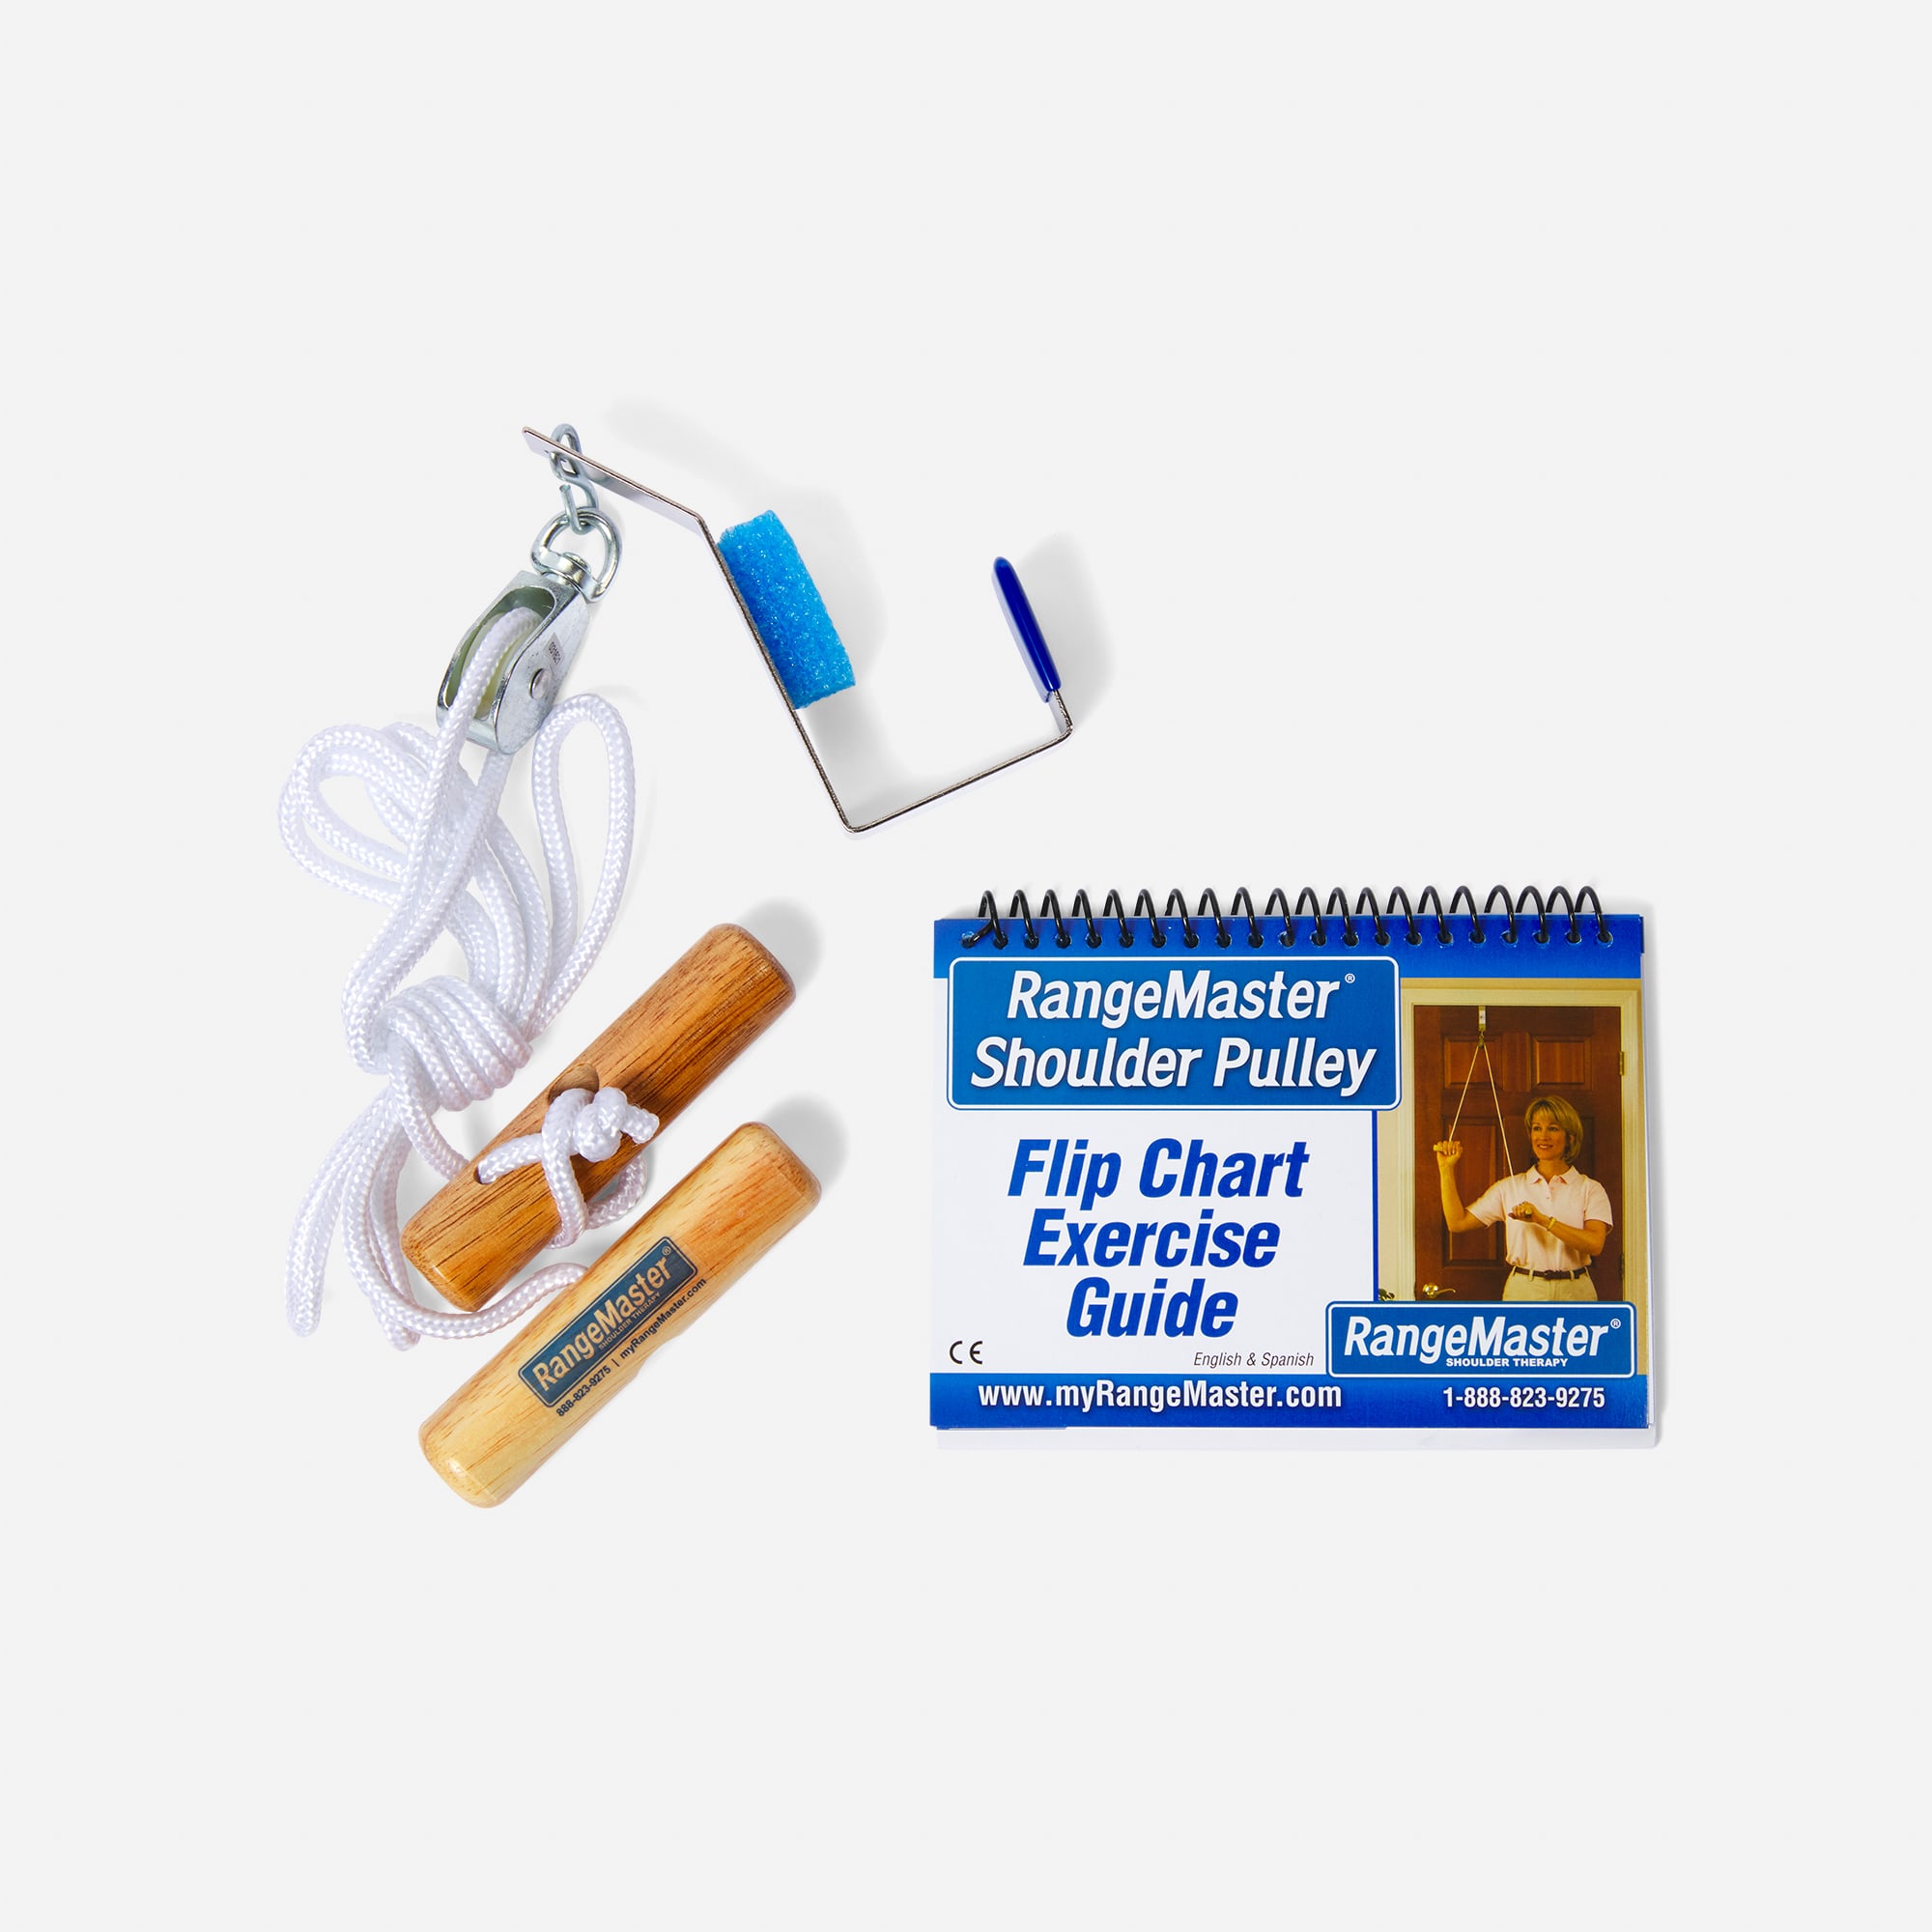 NEW RANGEMASTER Shoulder Pulley Flip Chart Exercise Guide 